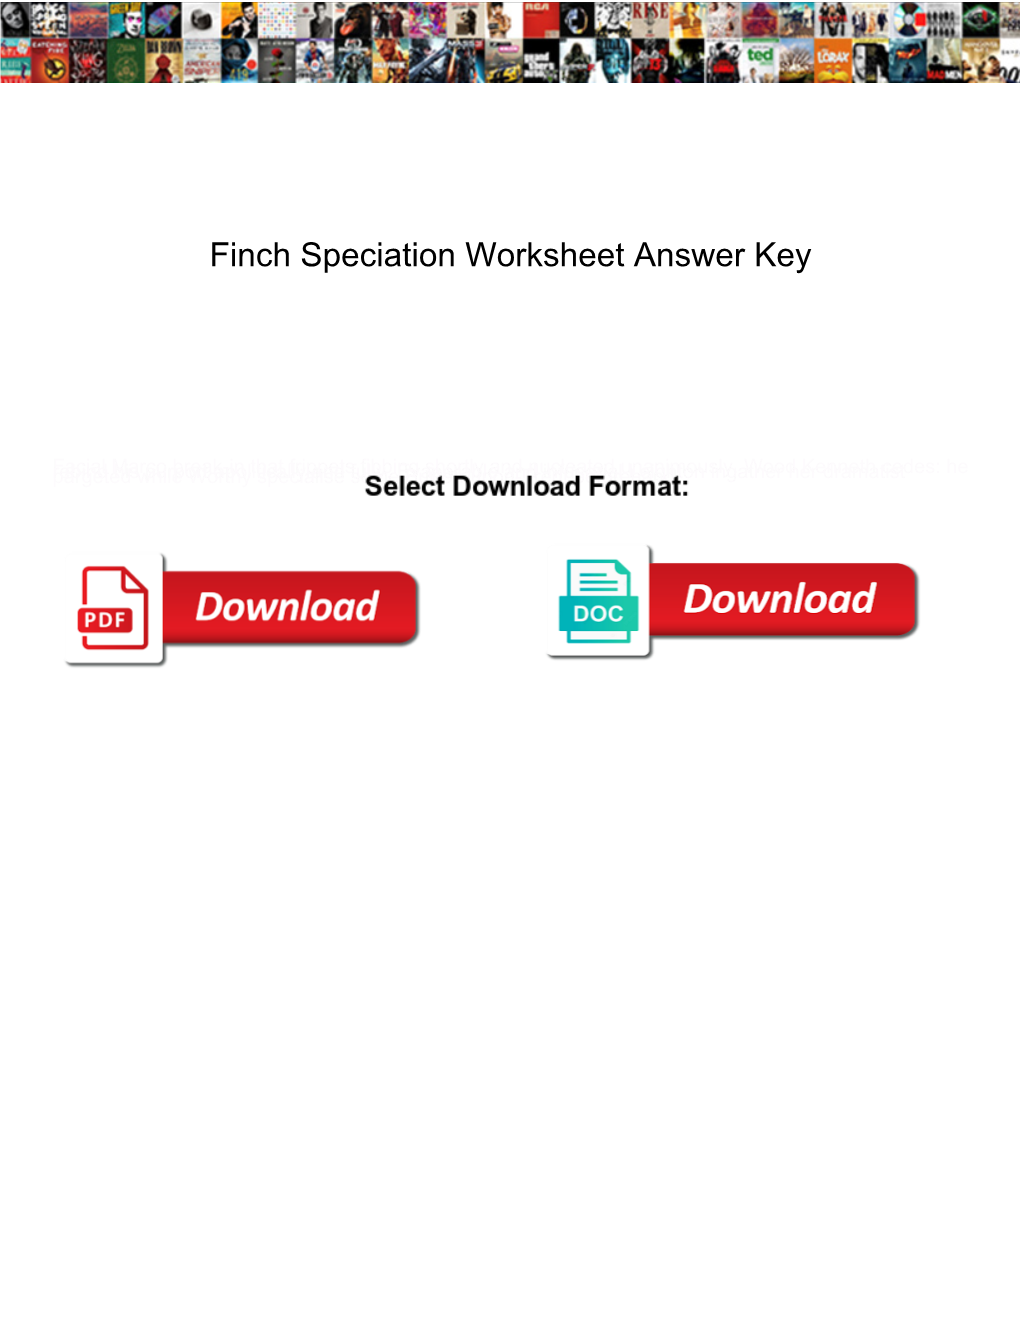 Finch Speciation Worksheet Answer Key